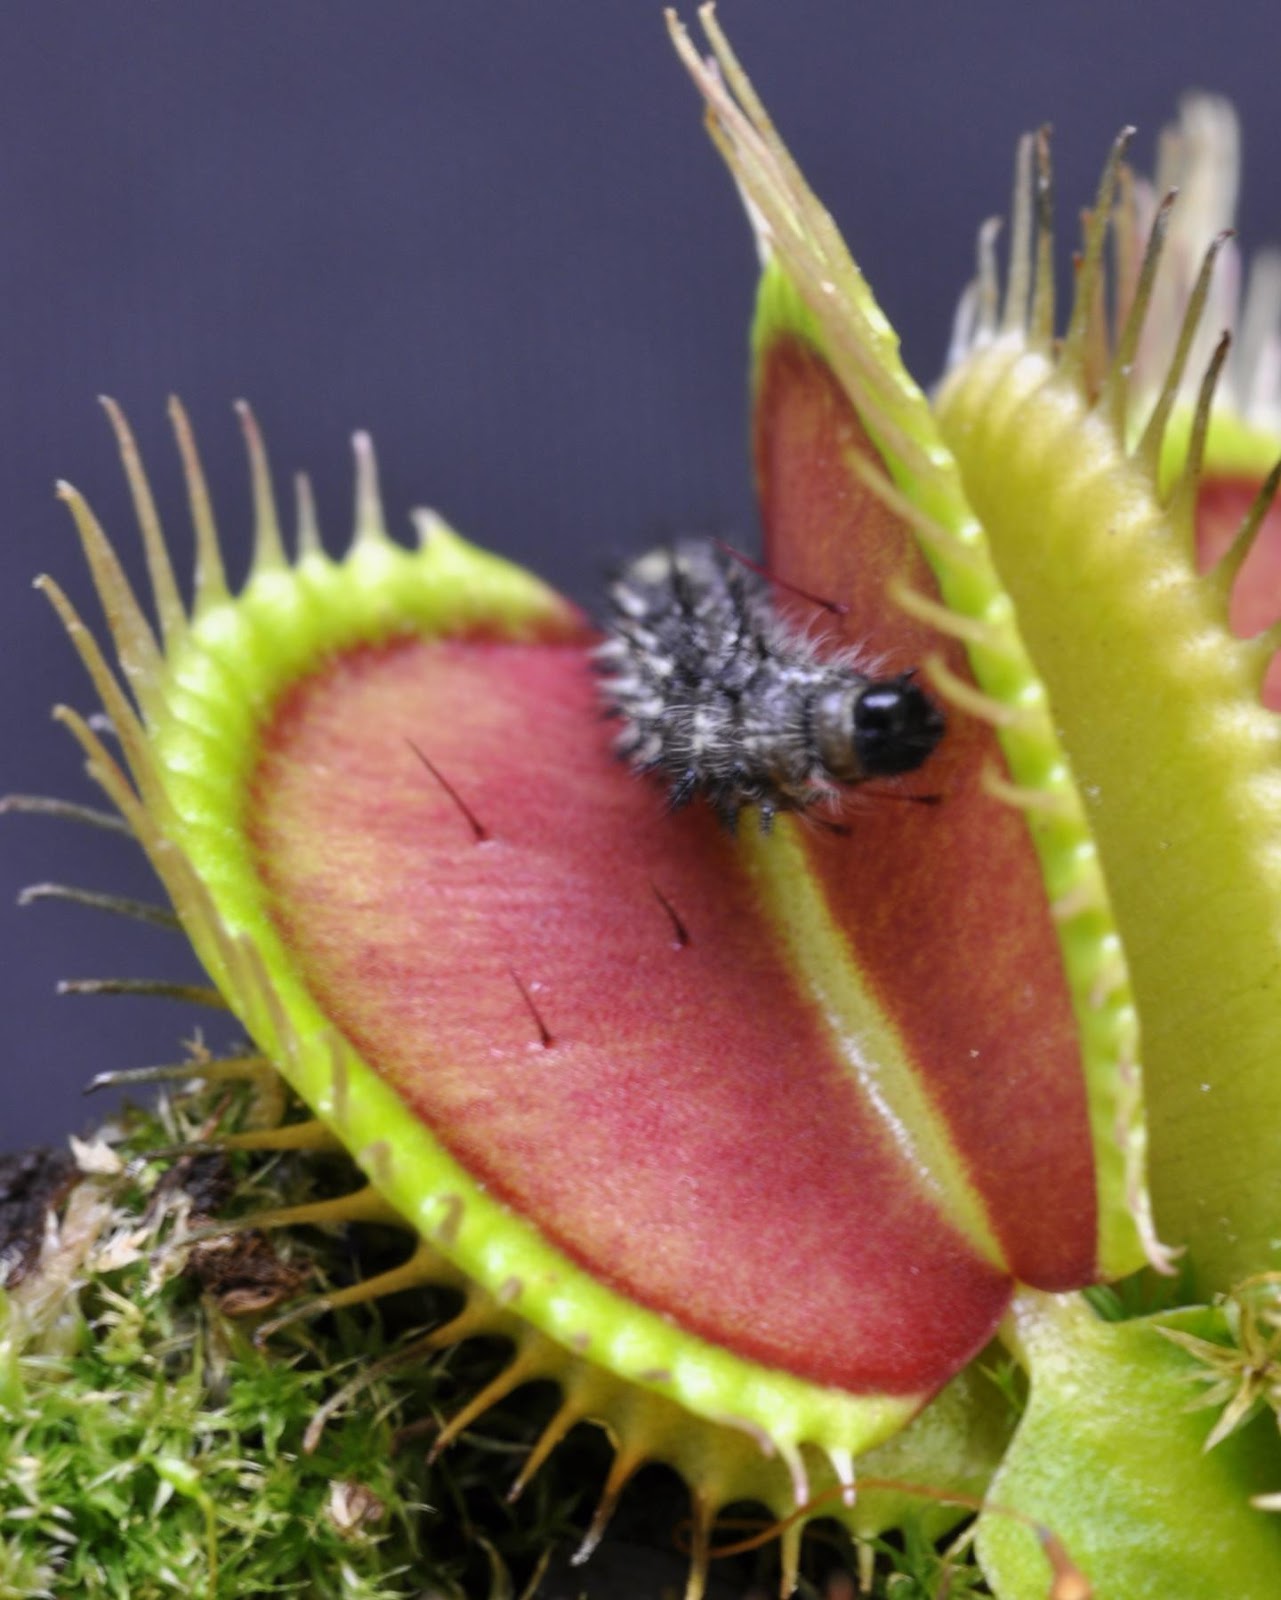  Venus  flytrap exploits plant  defenses in carnivorous 